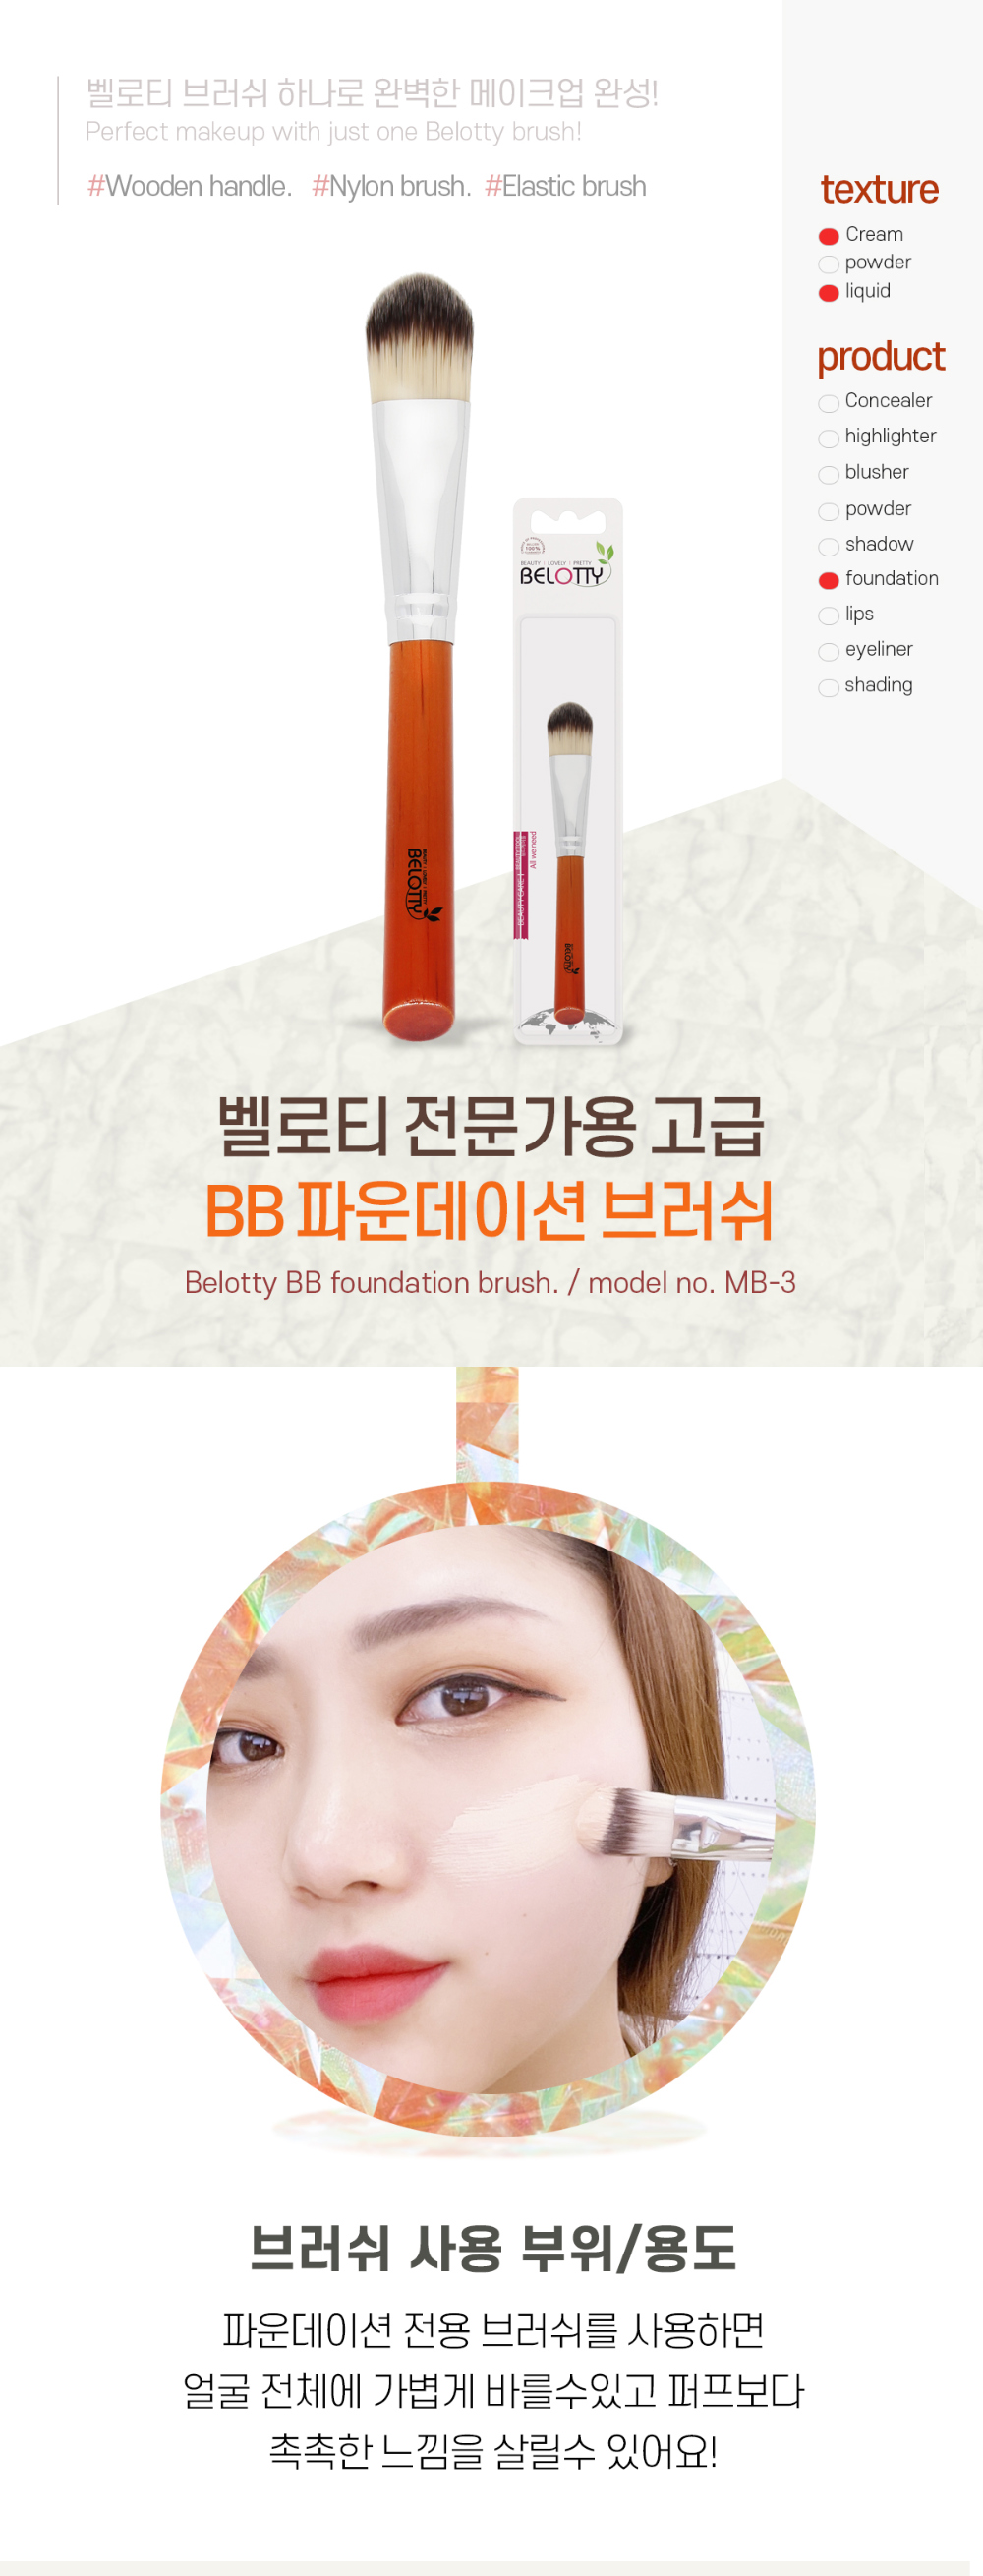 cosmetics product image-S24L2